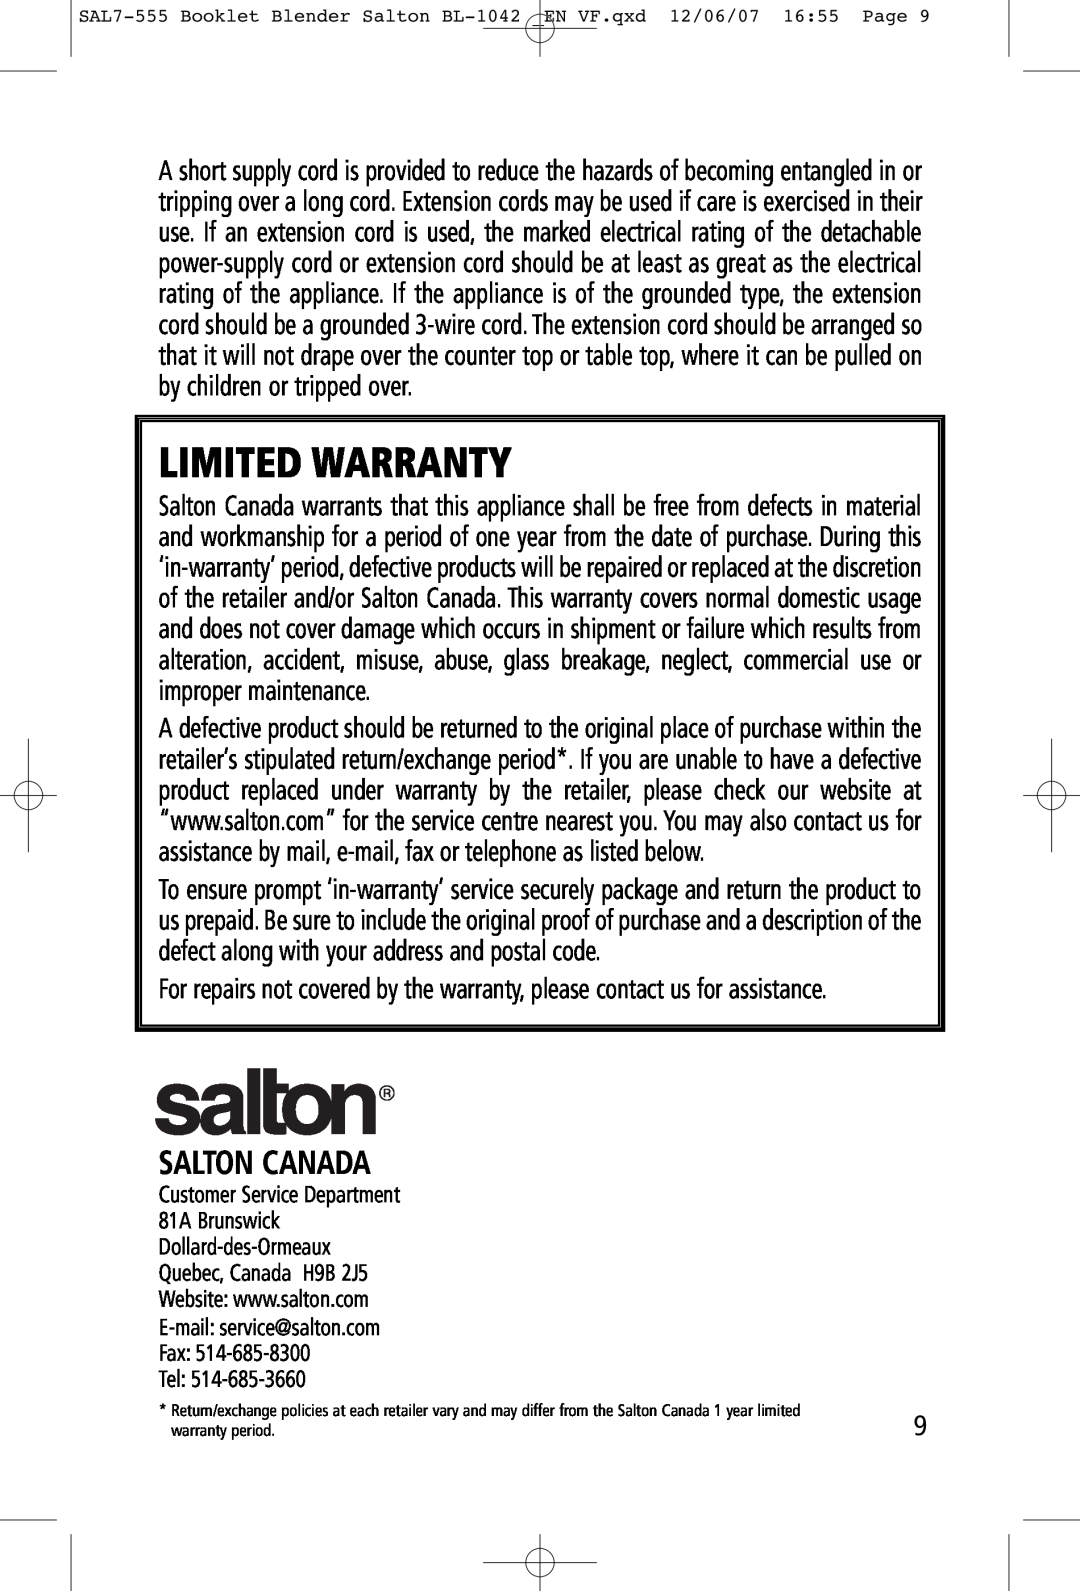 Salton BL-1042 manual Salton Canada, Limited Warranty 